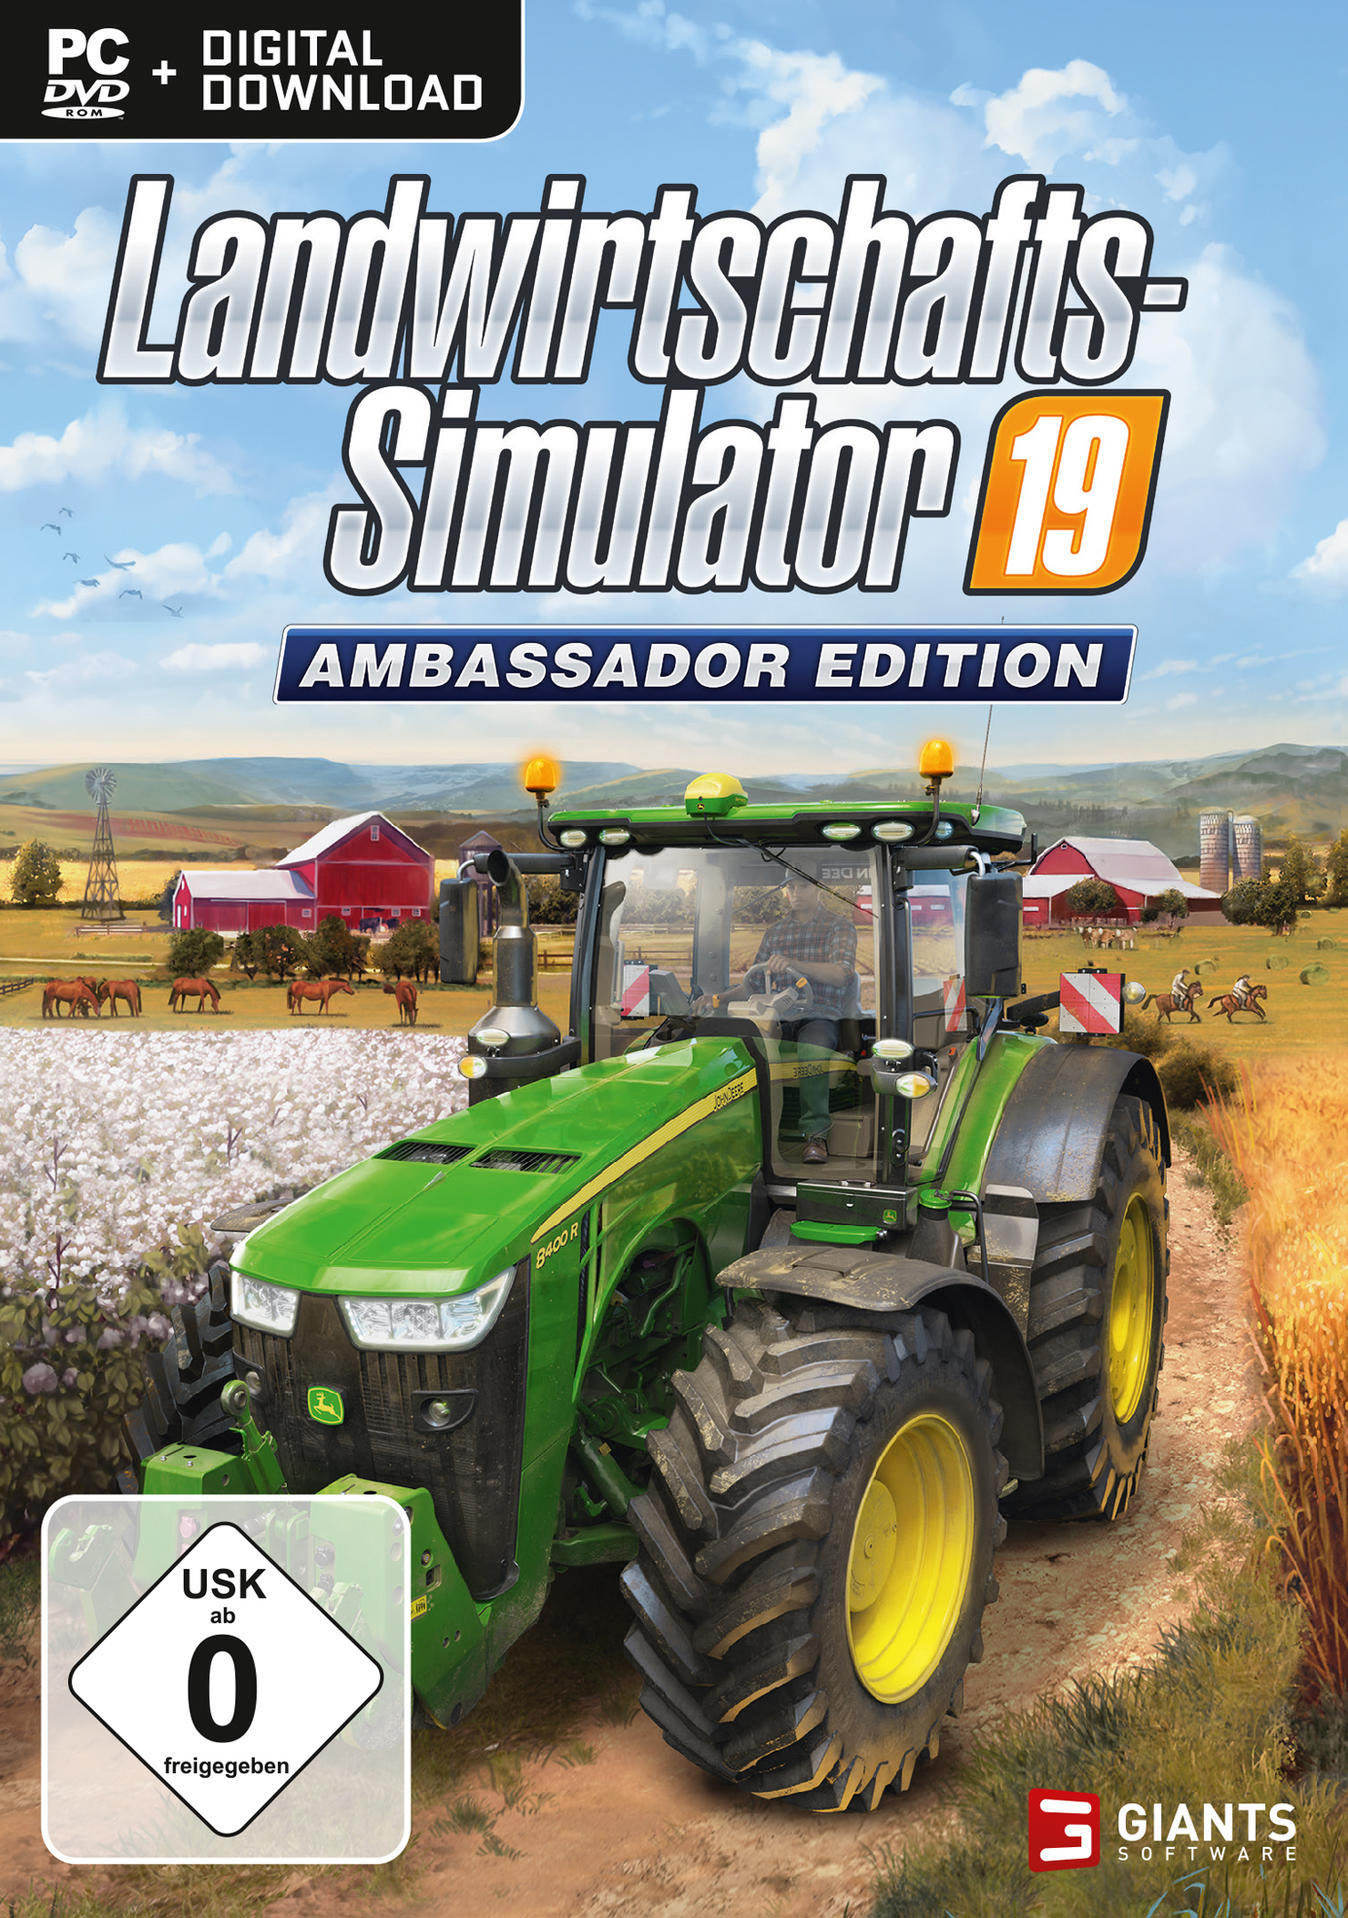 Landwirtschafts-Simulator 19 Ambassador Edition - [PC